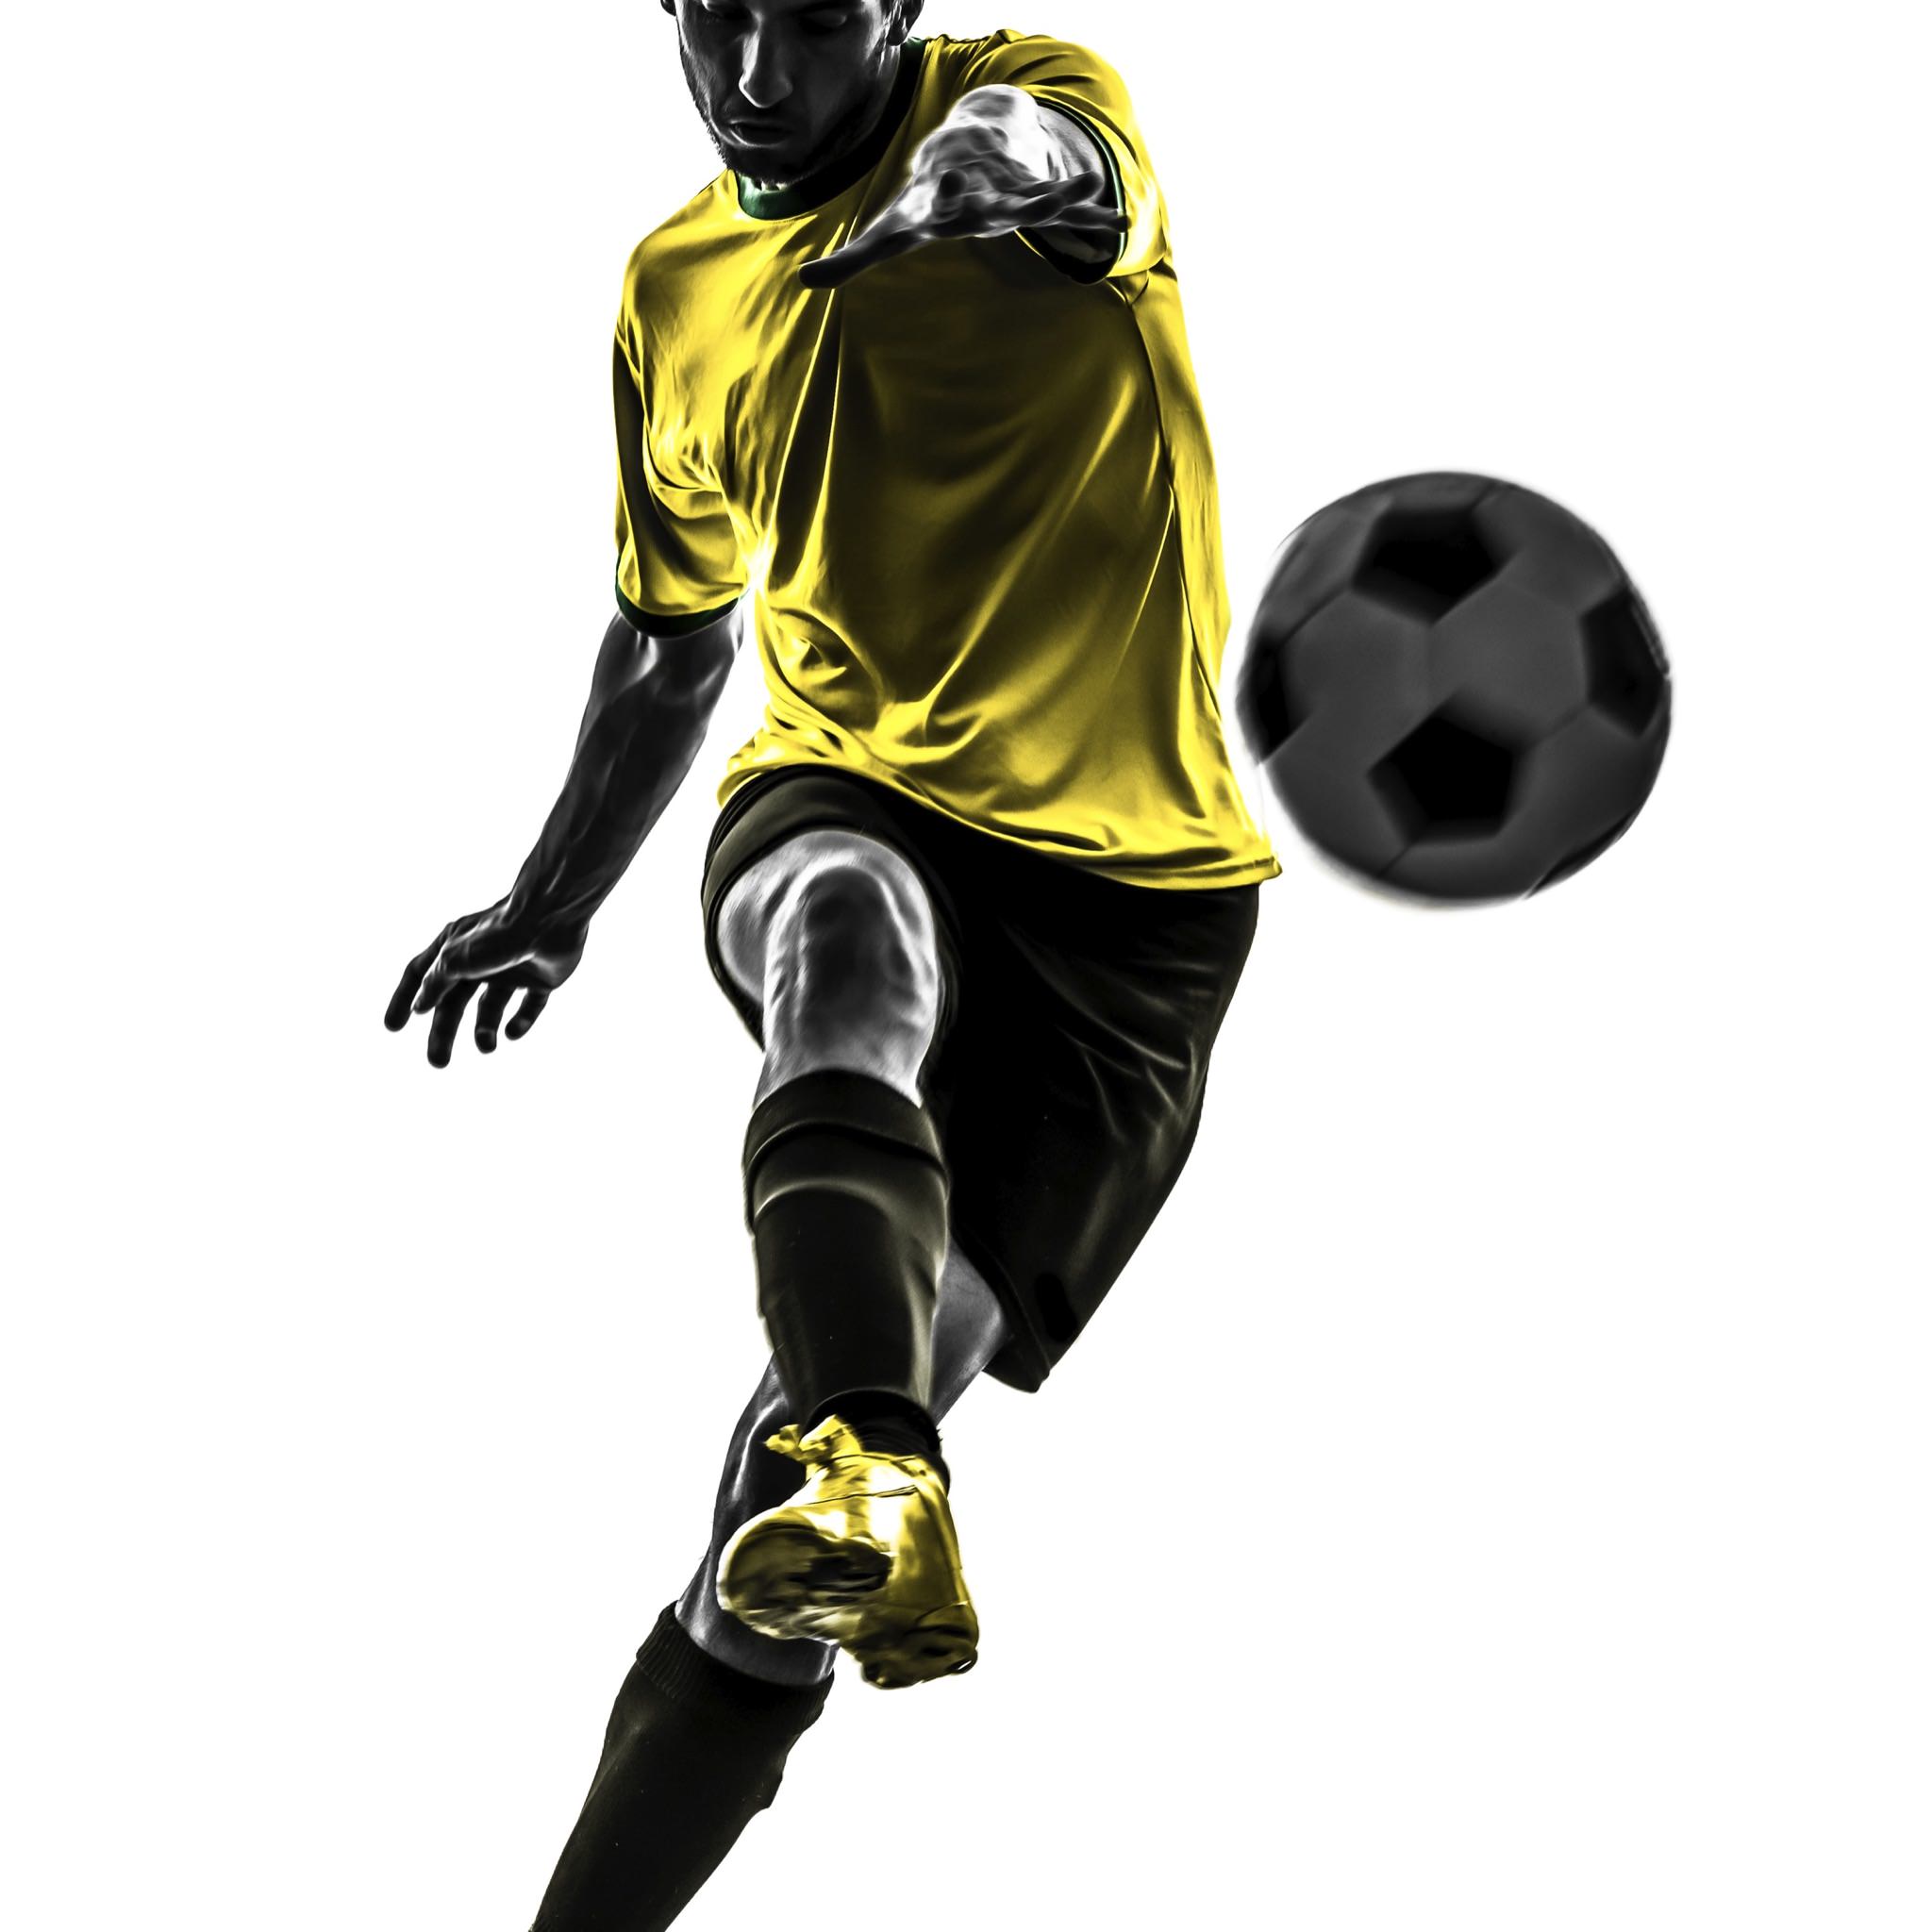 Soccer ball yellow black | wallpaper.sc iPad